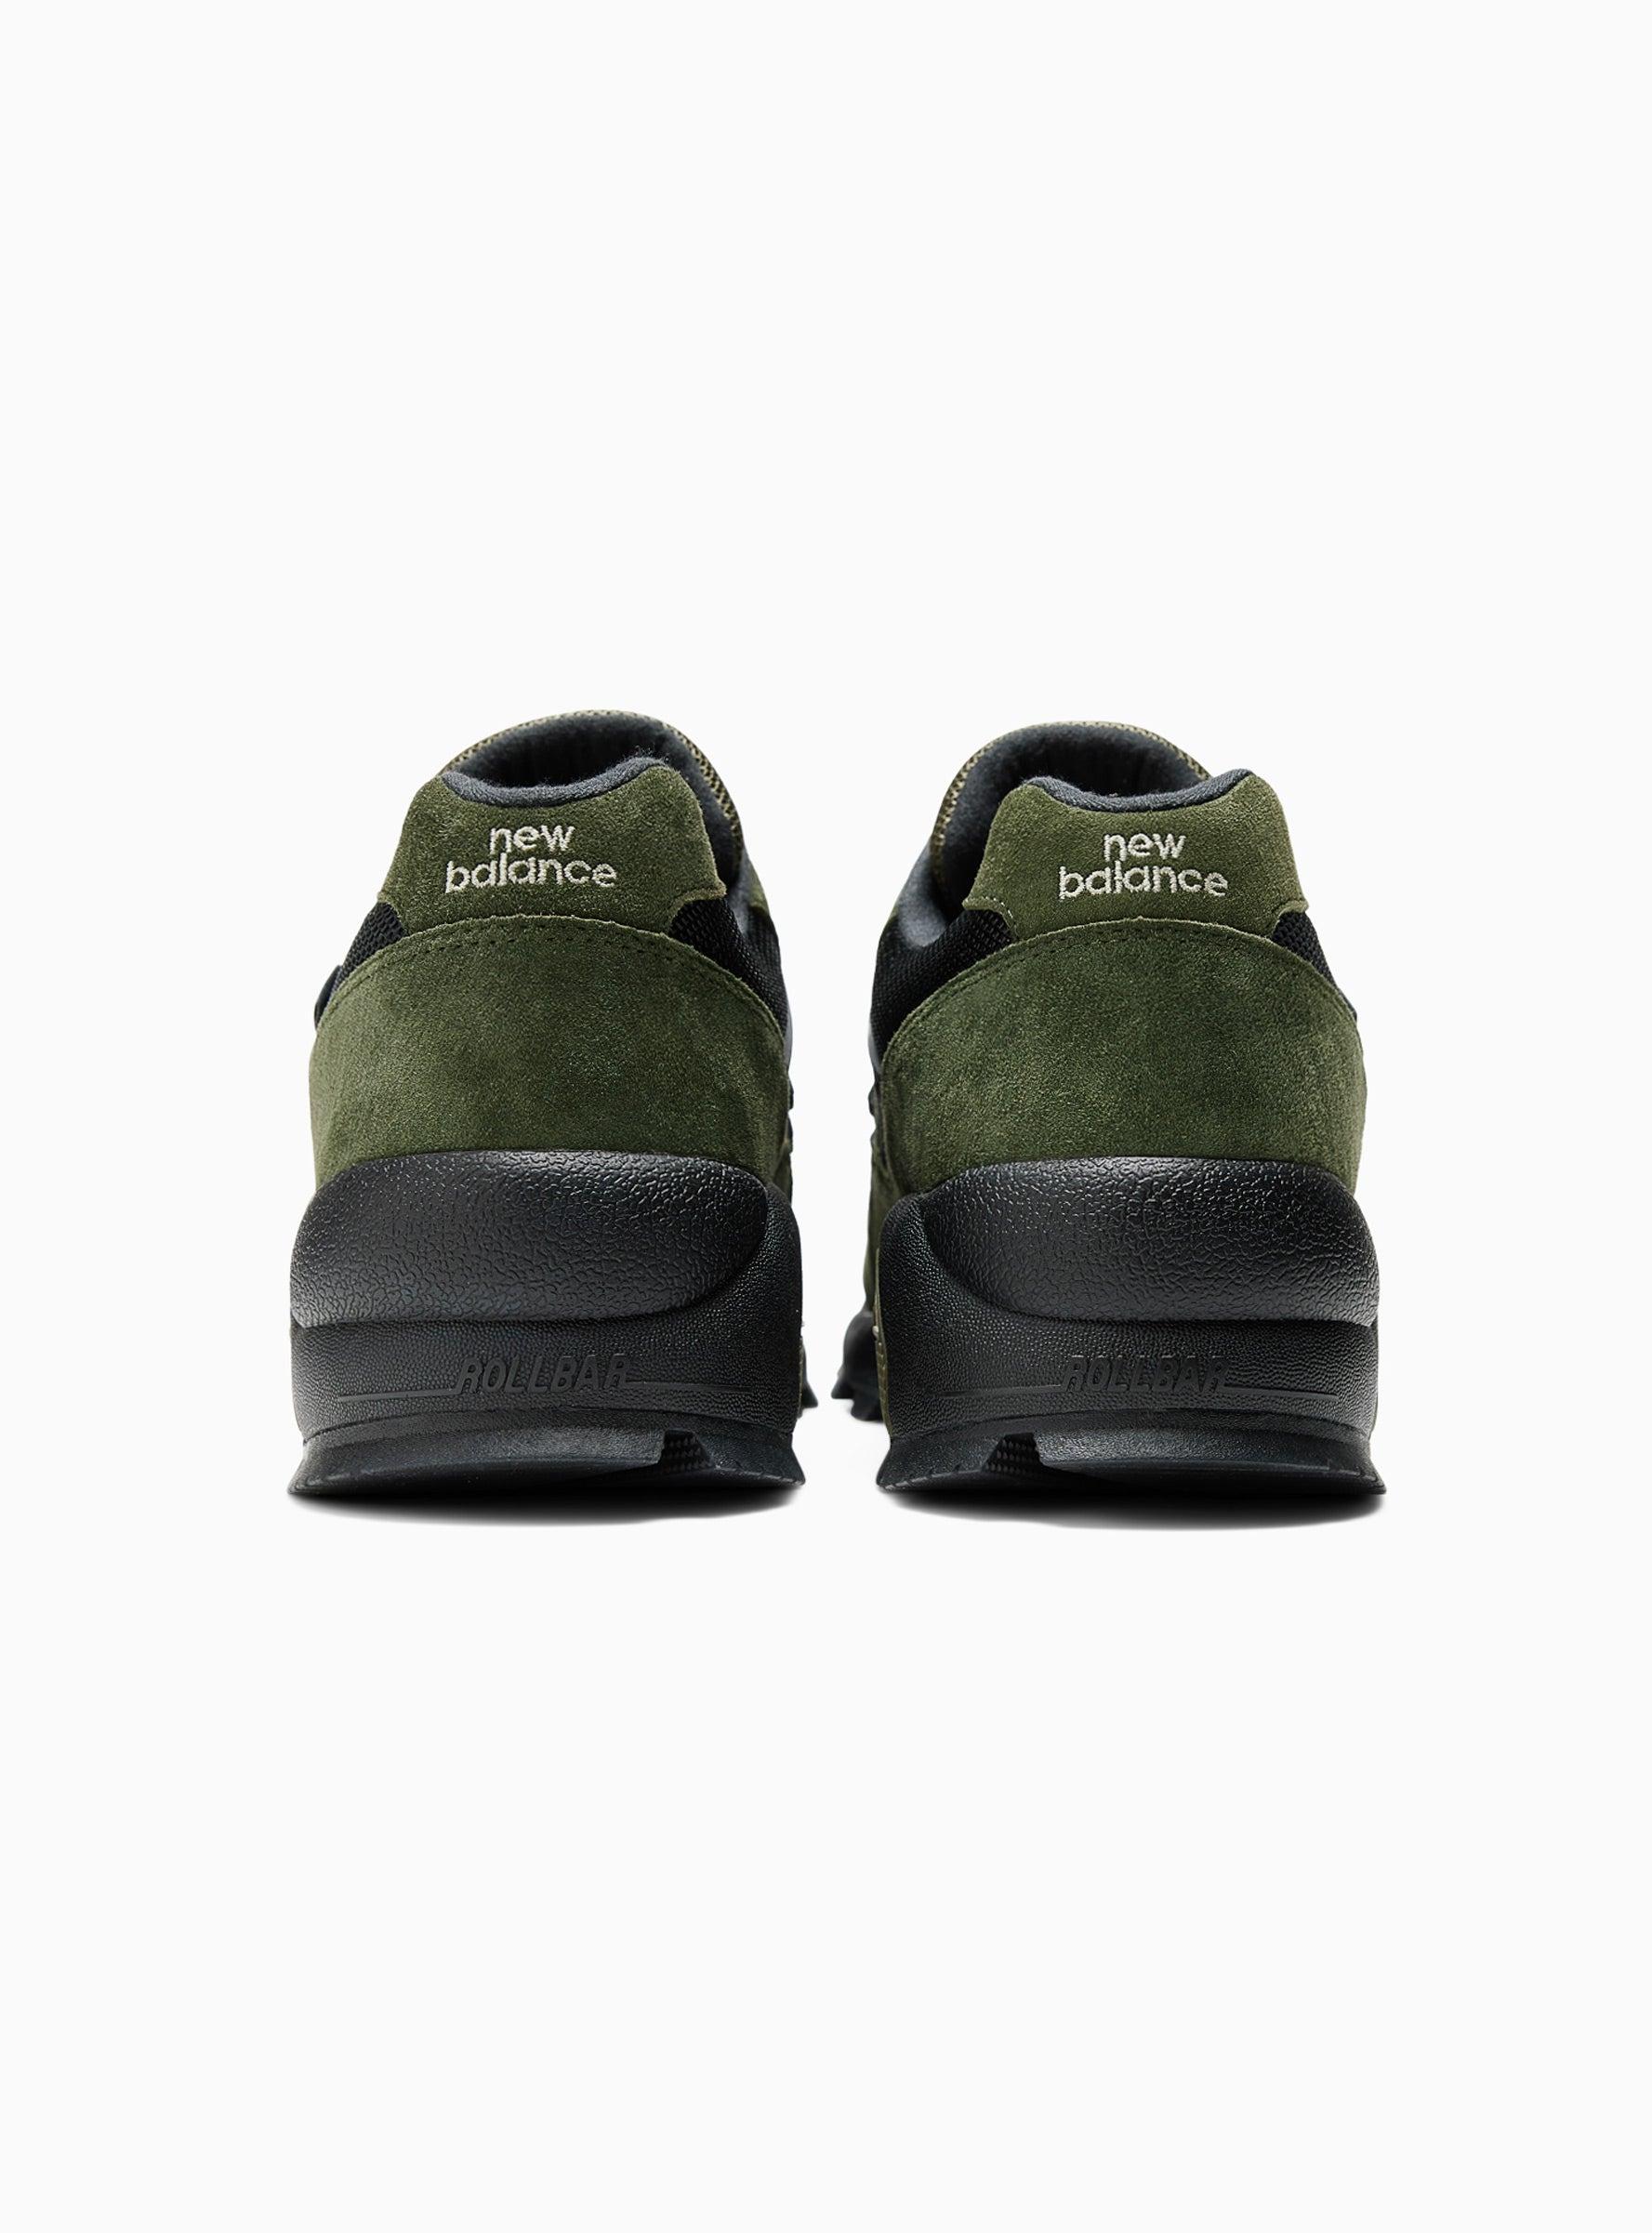 New Balance Mt580rbl Gtx Sneakers Kombu & Black in Green for Men | Lyst